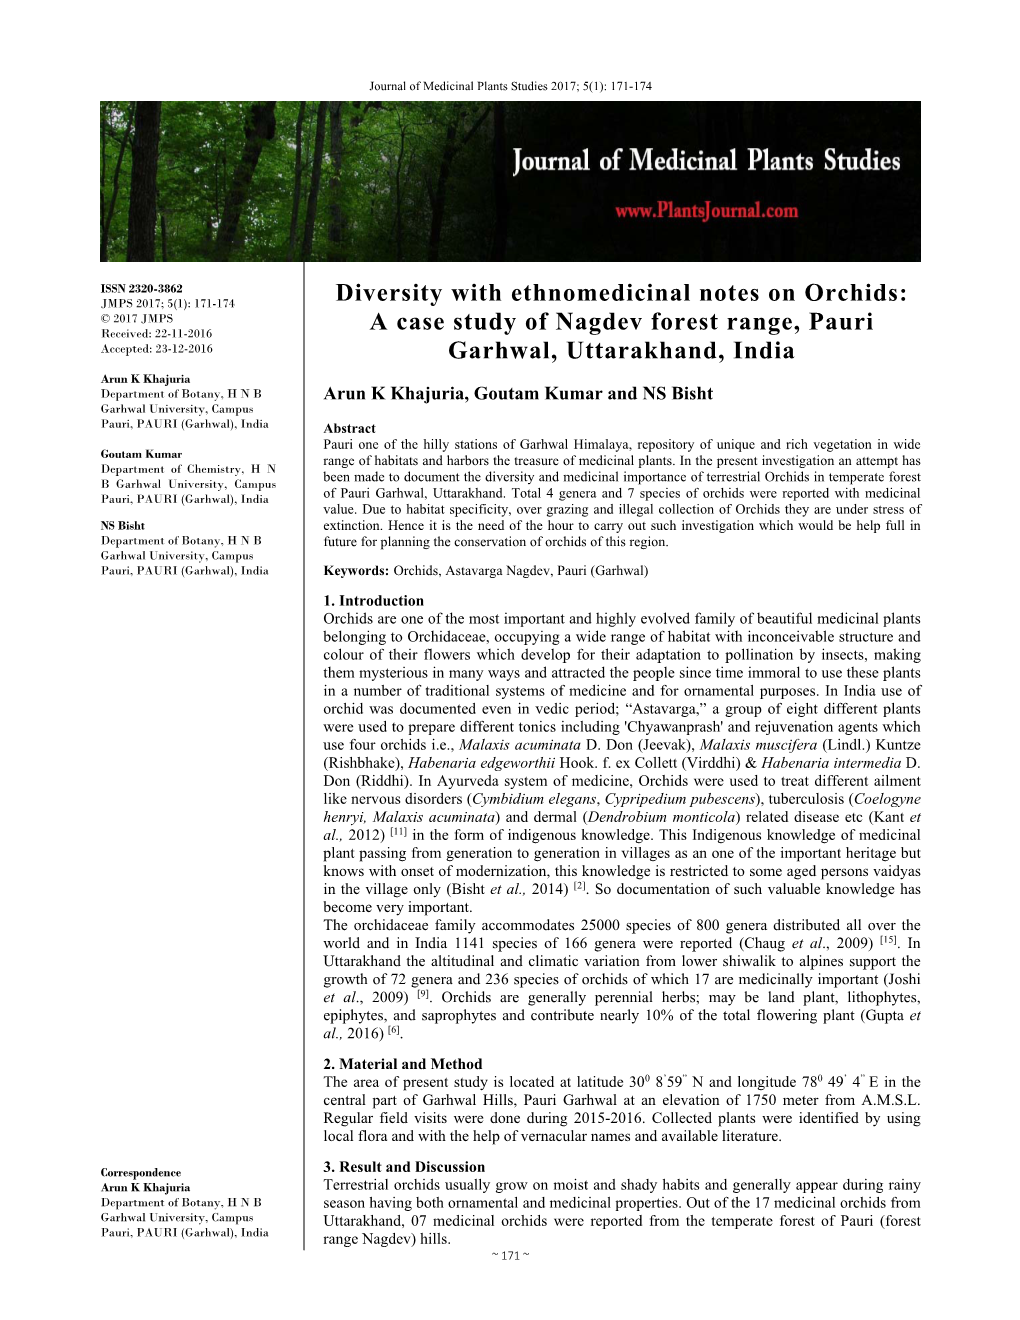 A Case Study of Nagdev Forest Range, Pauri Garhwal, Uttarakhand, India